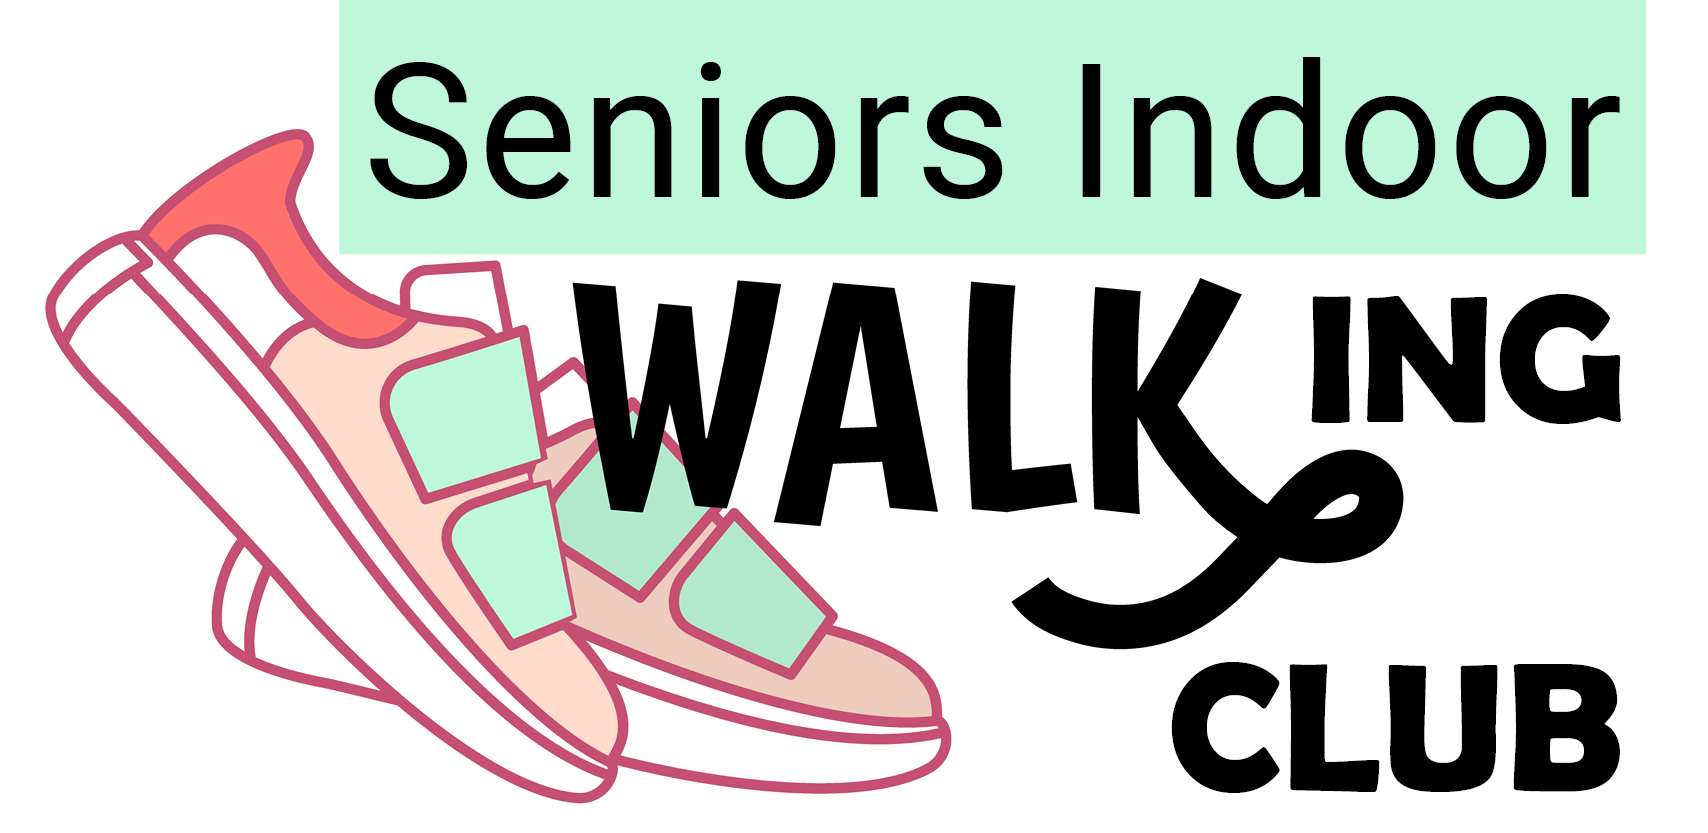 Seniors Indoor Walking Club running shoes